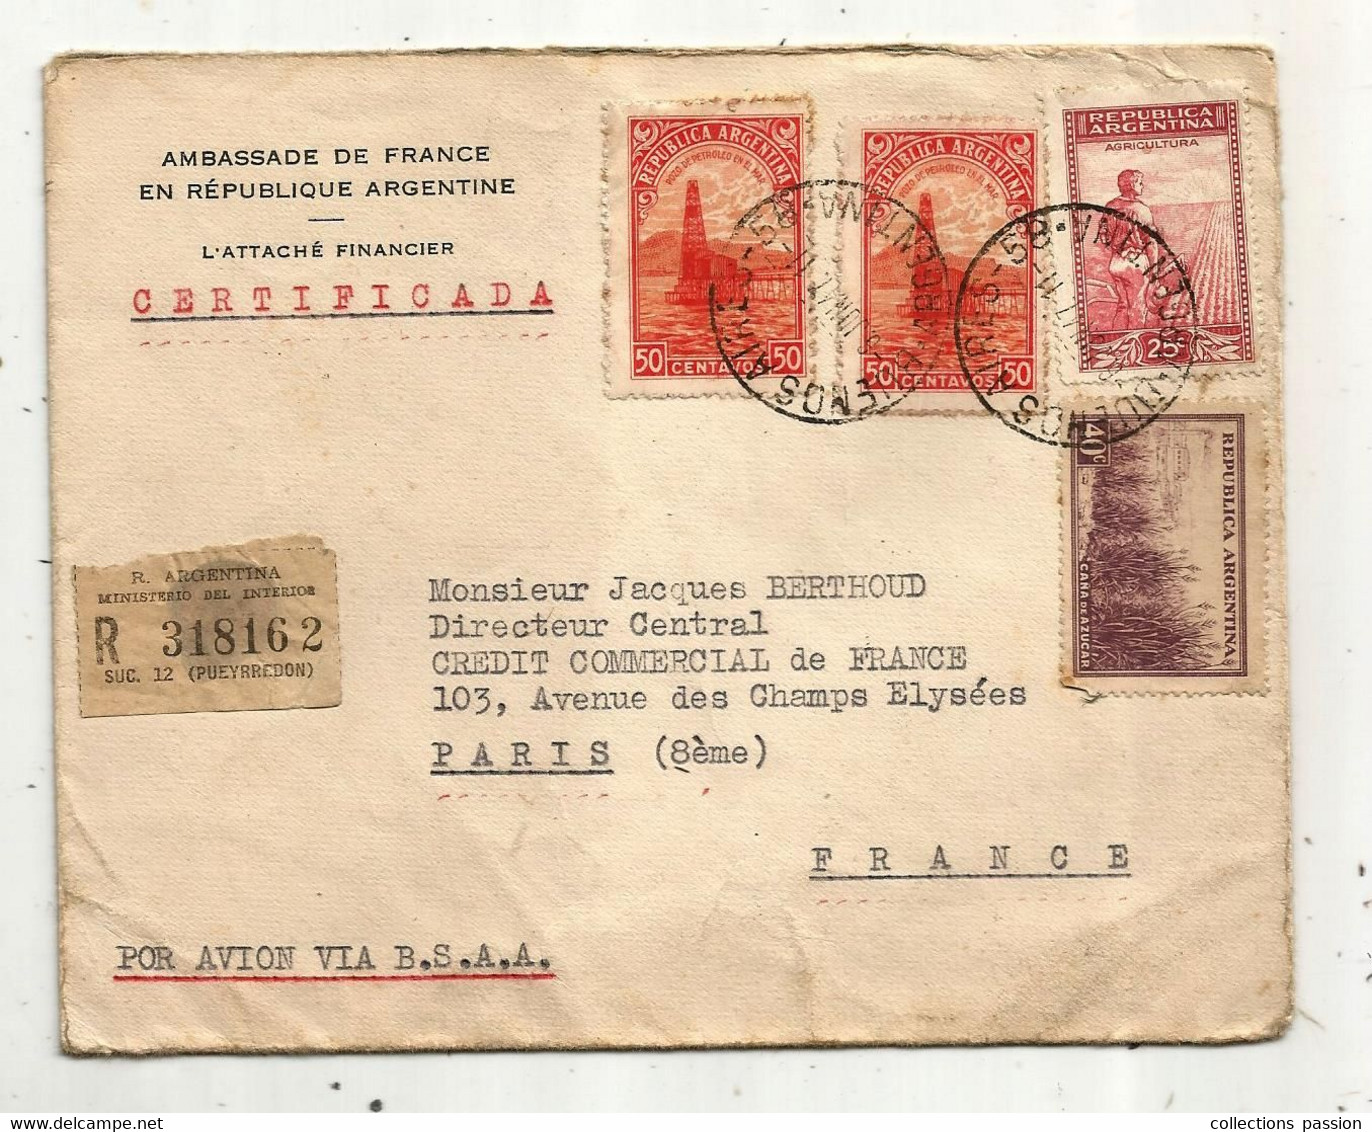 Lettre , Republica Argentina , BUENOS AIRES 58 ,1947, Ambassade De France ,CERTIFICADA ,R Suc. 12 (PUEYRREDON) - Covers & Documents